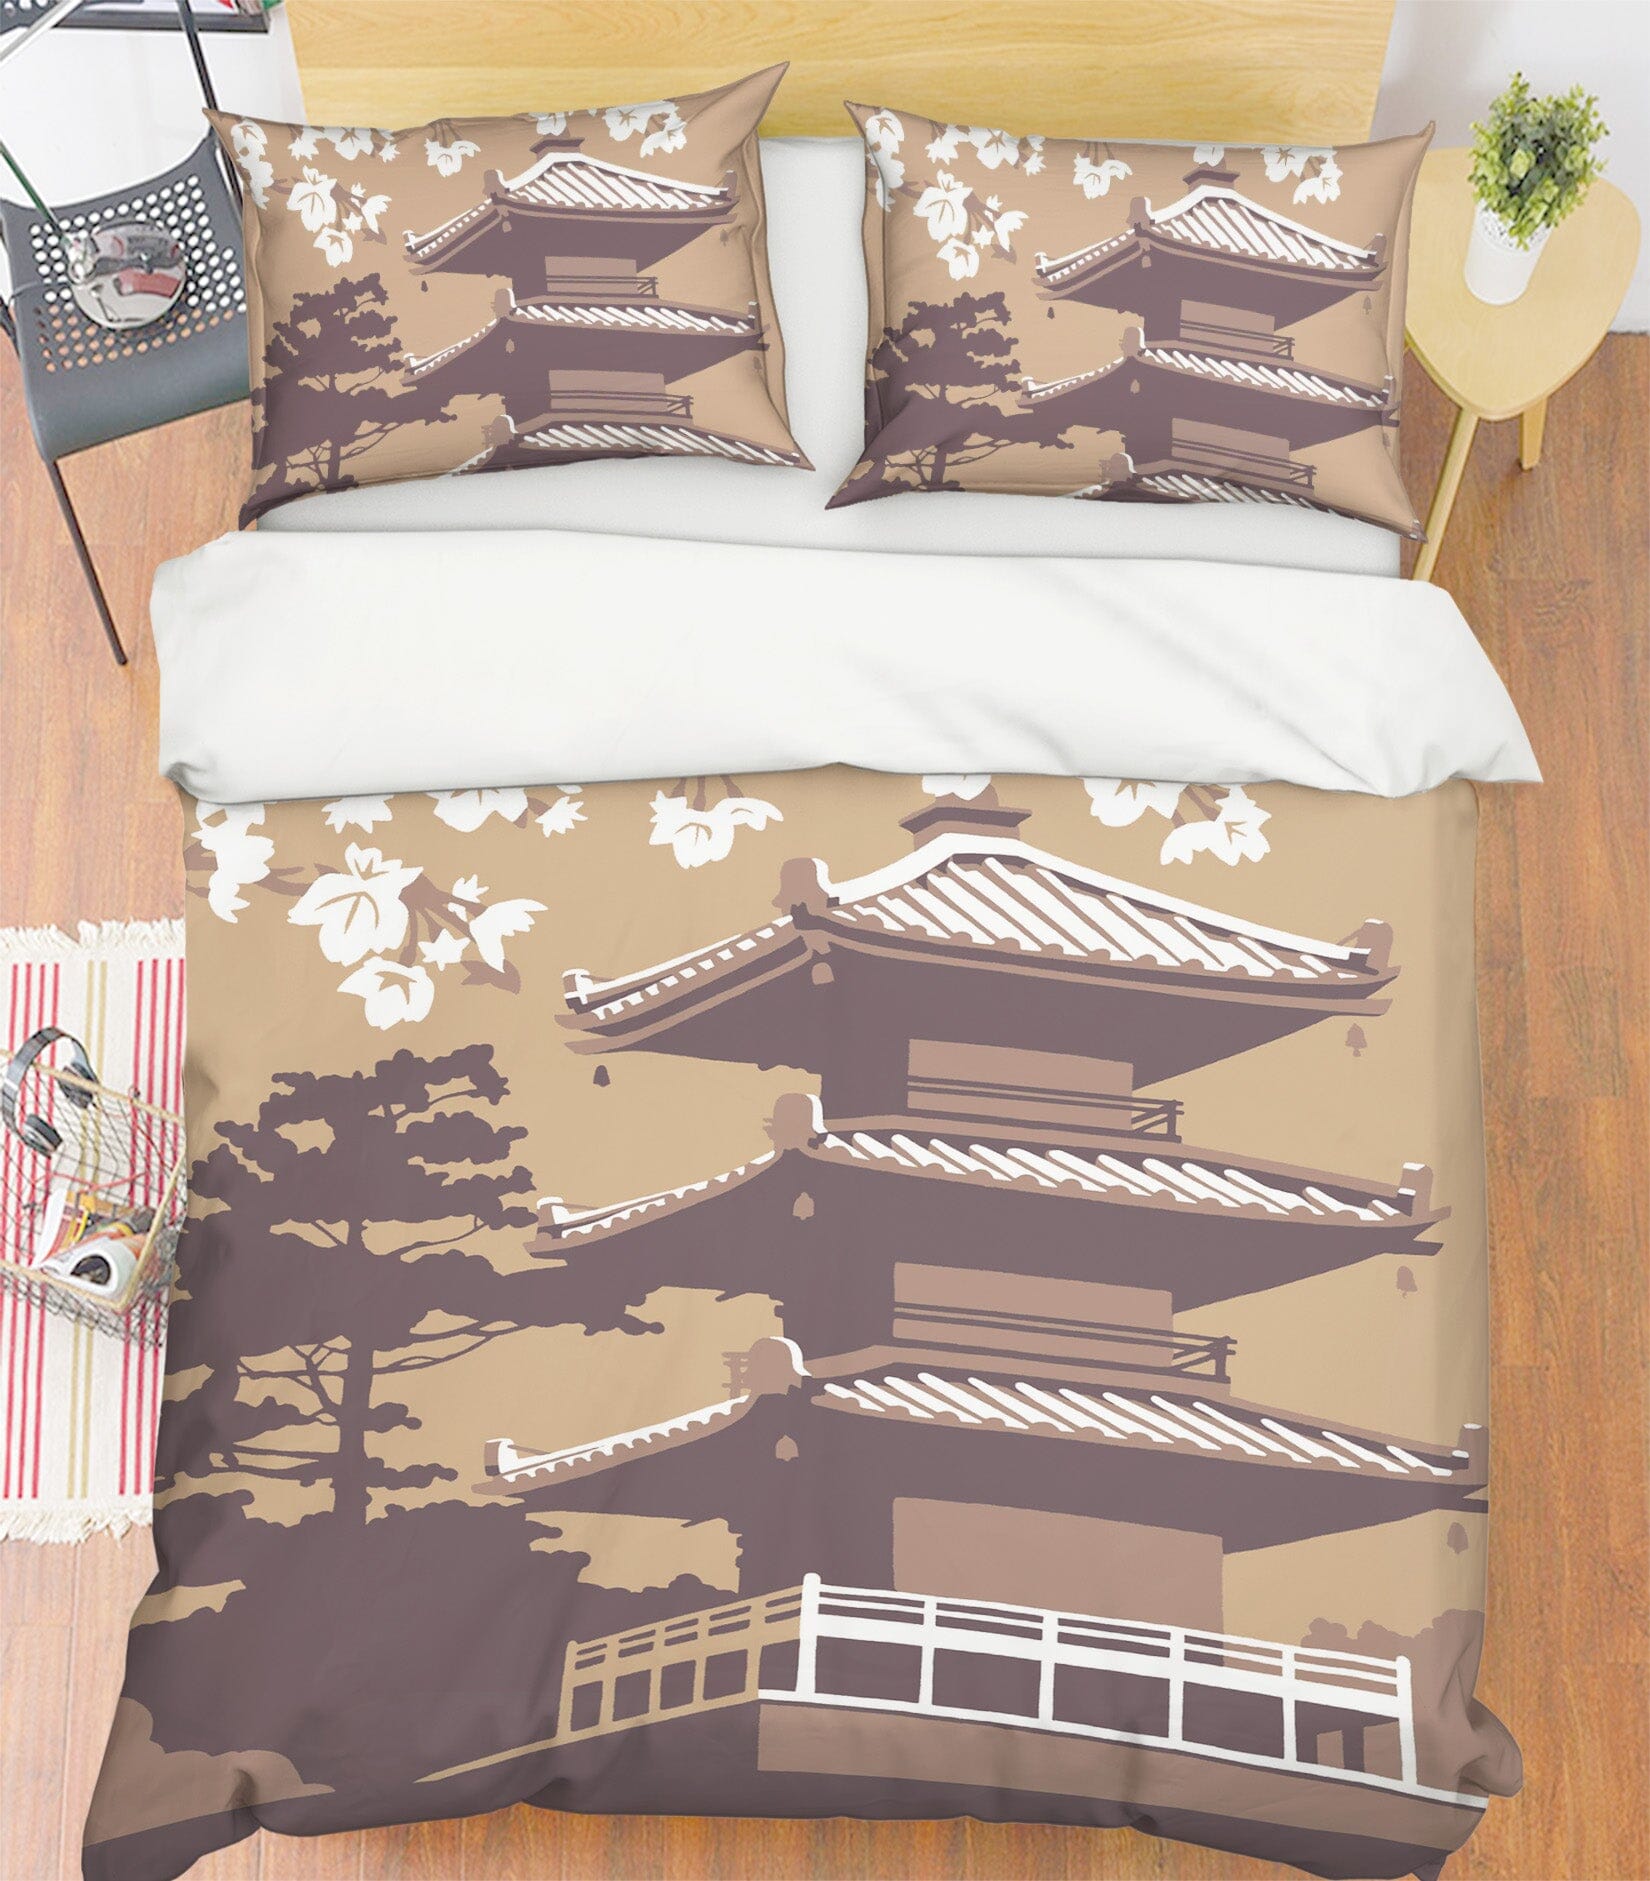 3D Japan 2020 Steve Read Bedding Bed Pillowcases Quilt Quiet Covers AJ Creativity Home 